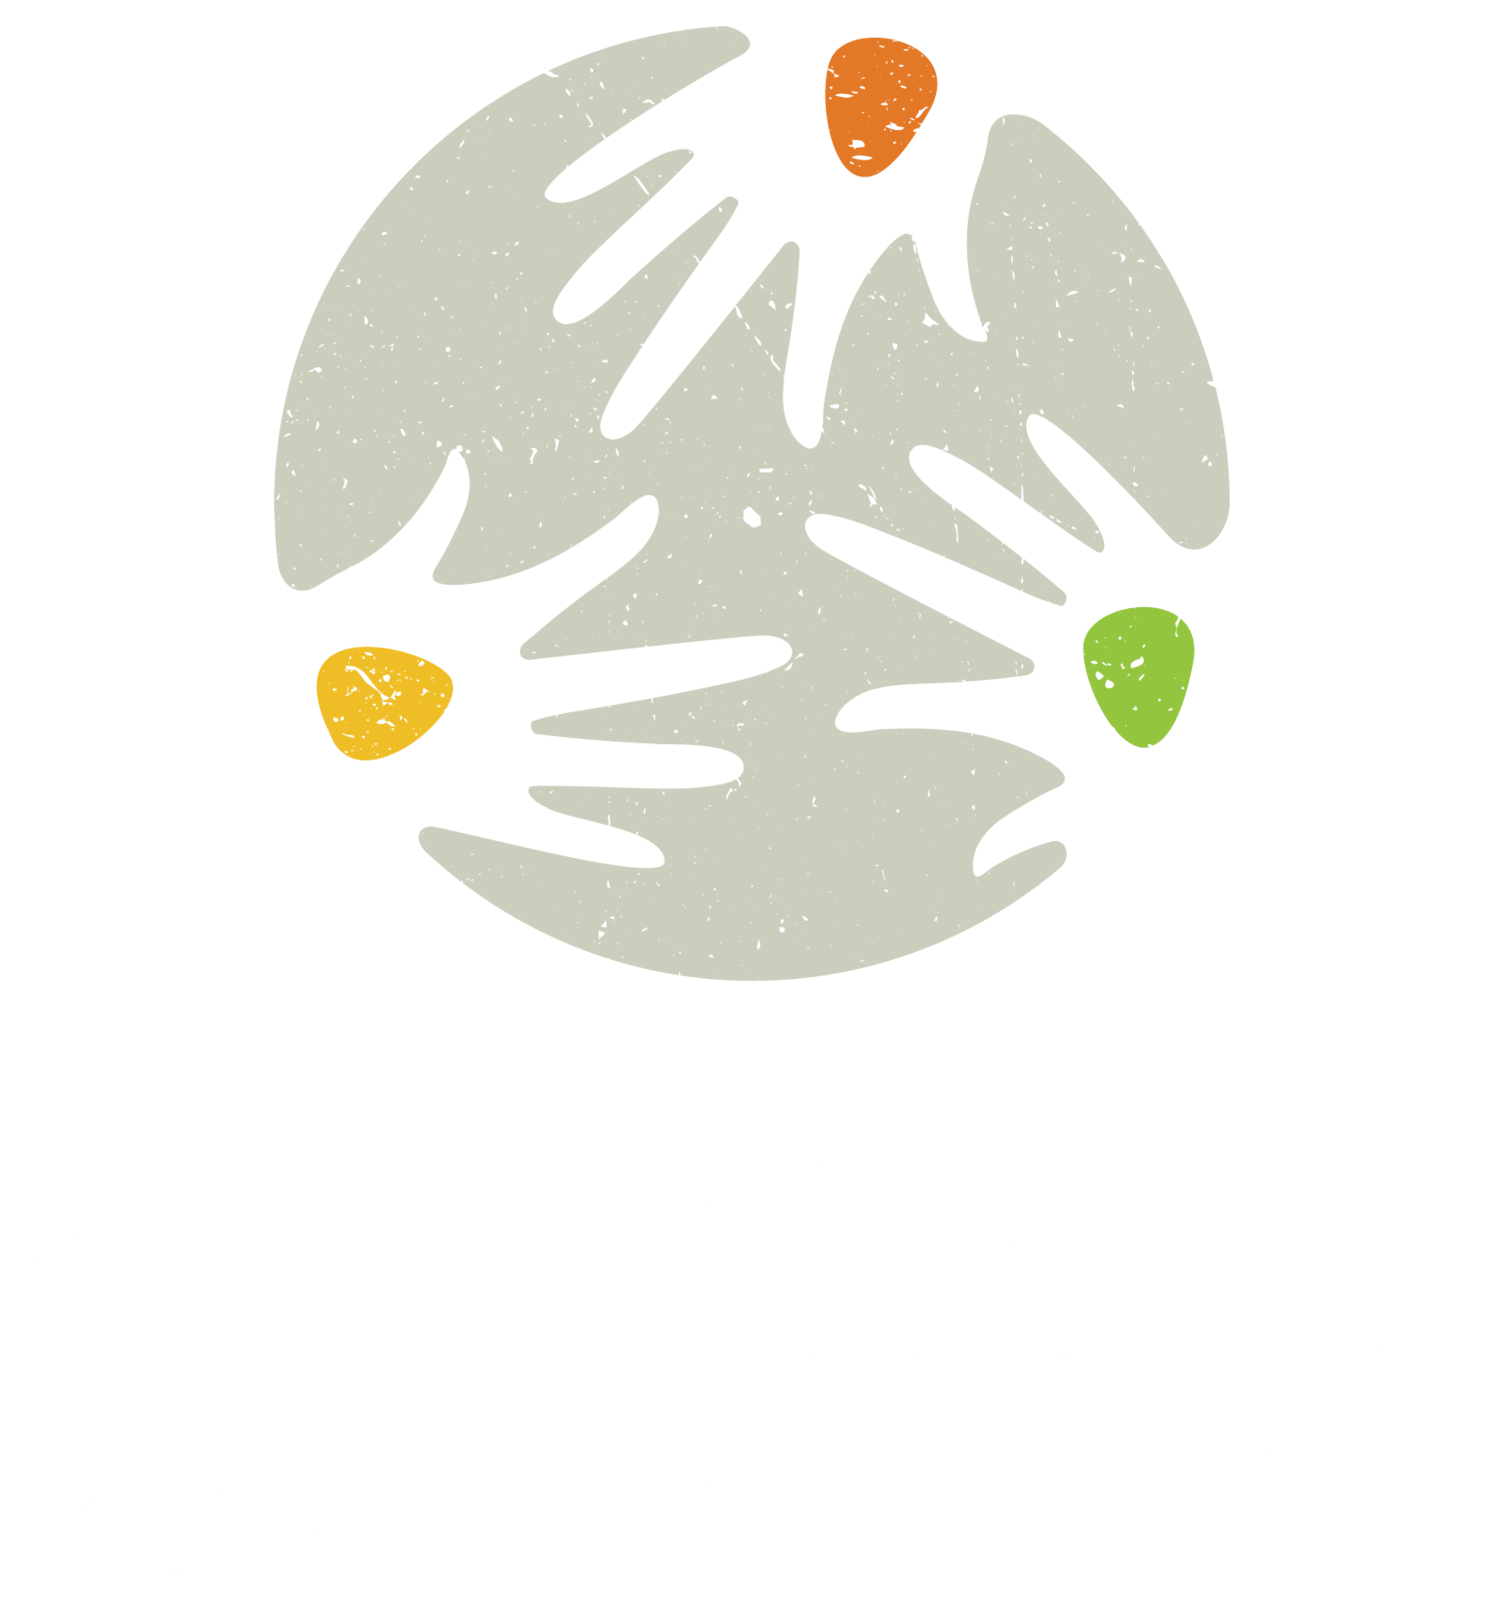 Chuku's - The Nigerian Tapas Restaurant